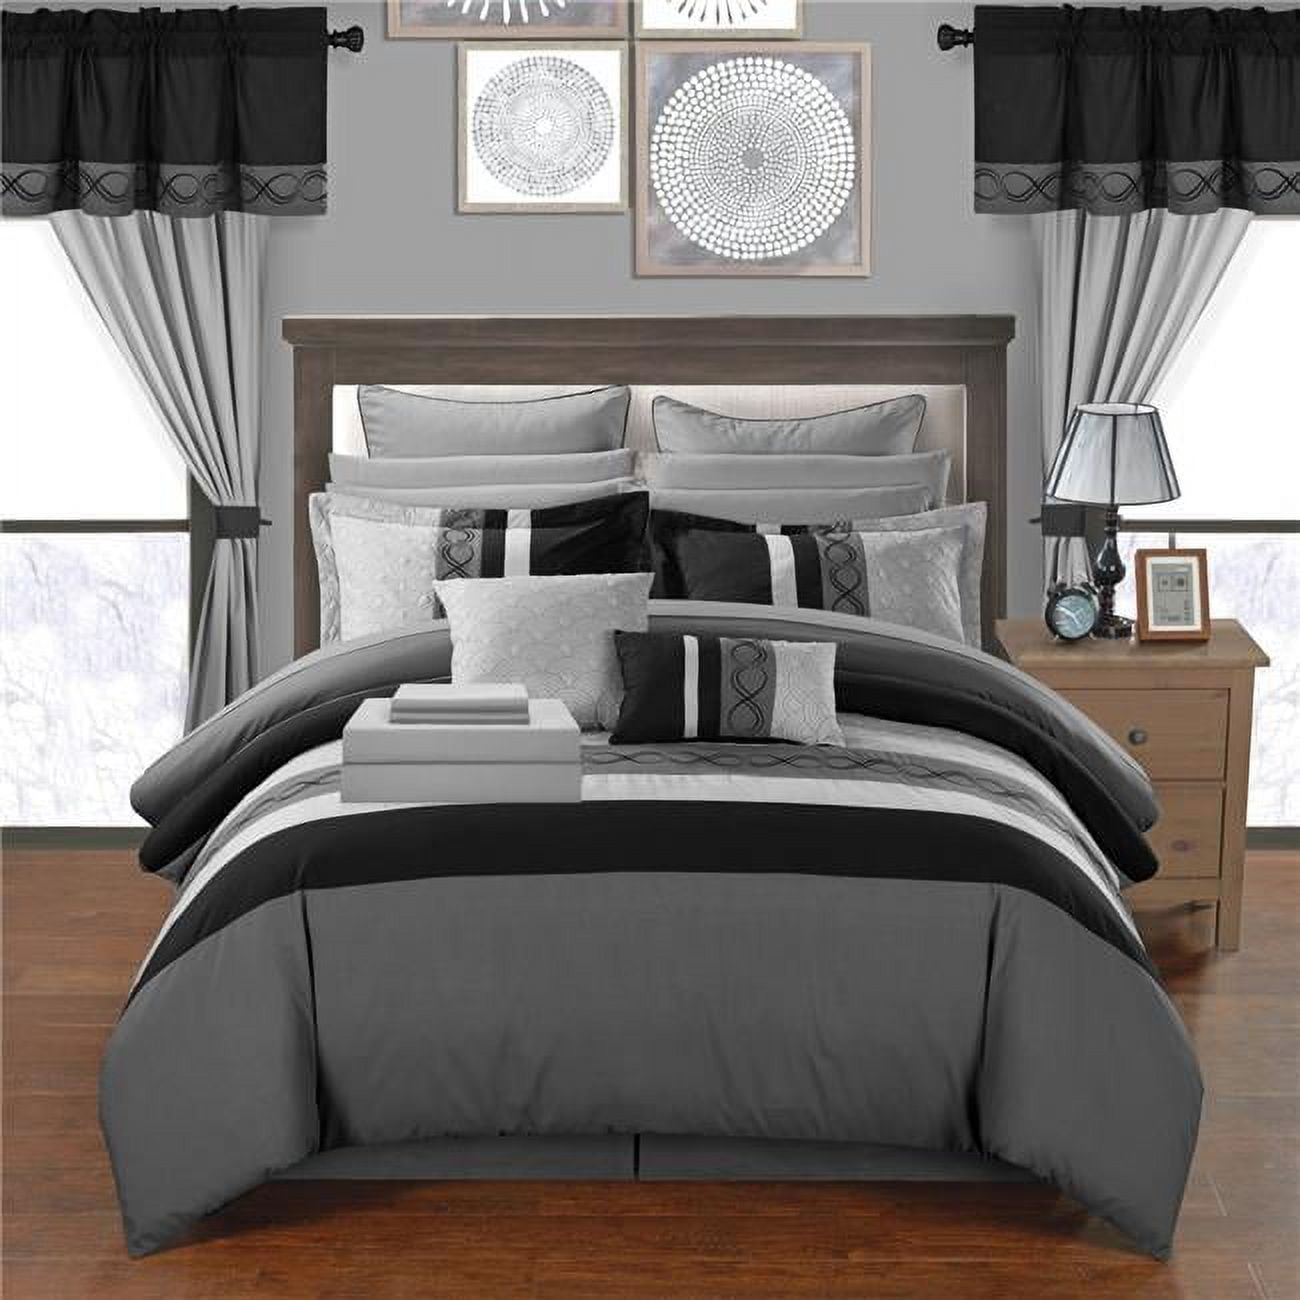 Cs0947-us 24 Piece Shilo Embroidered Design Comforter Bedding Set, Grey - Queen